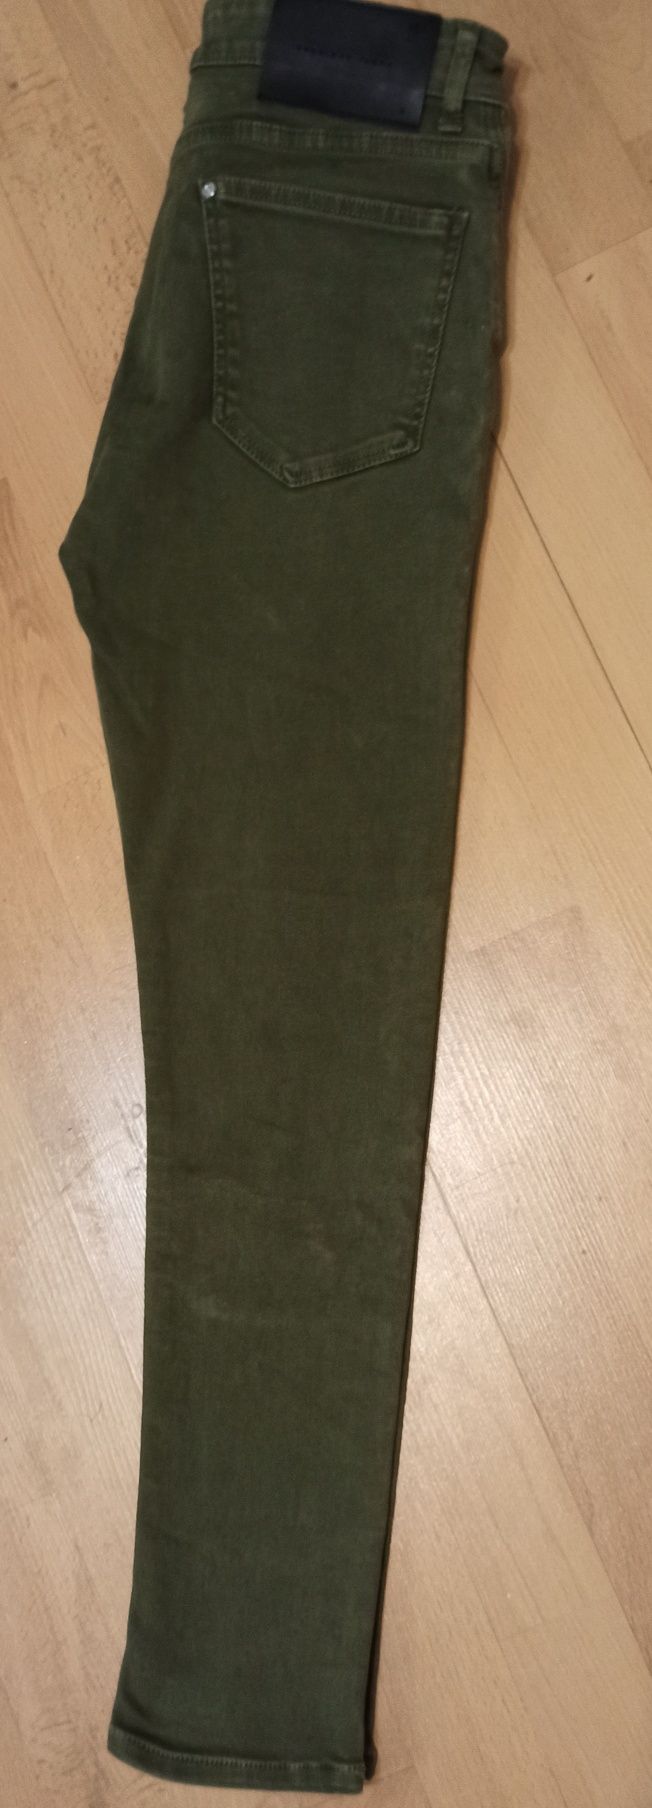 Spodnie Zara Men butelkowa zieleń